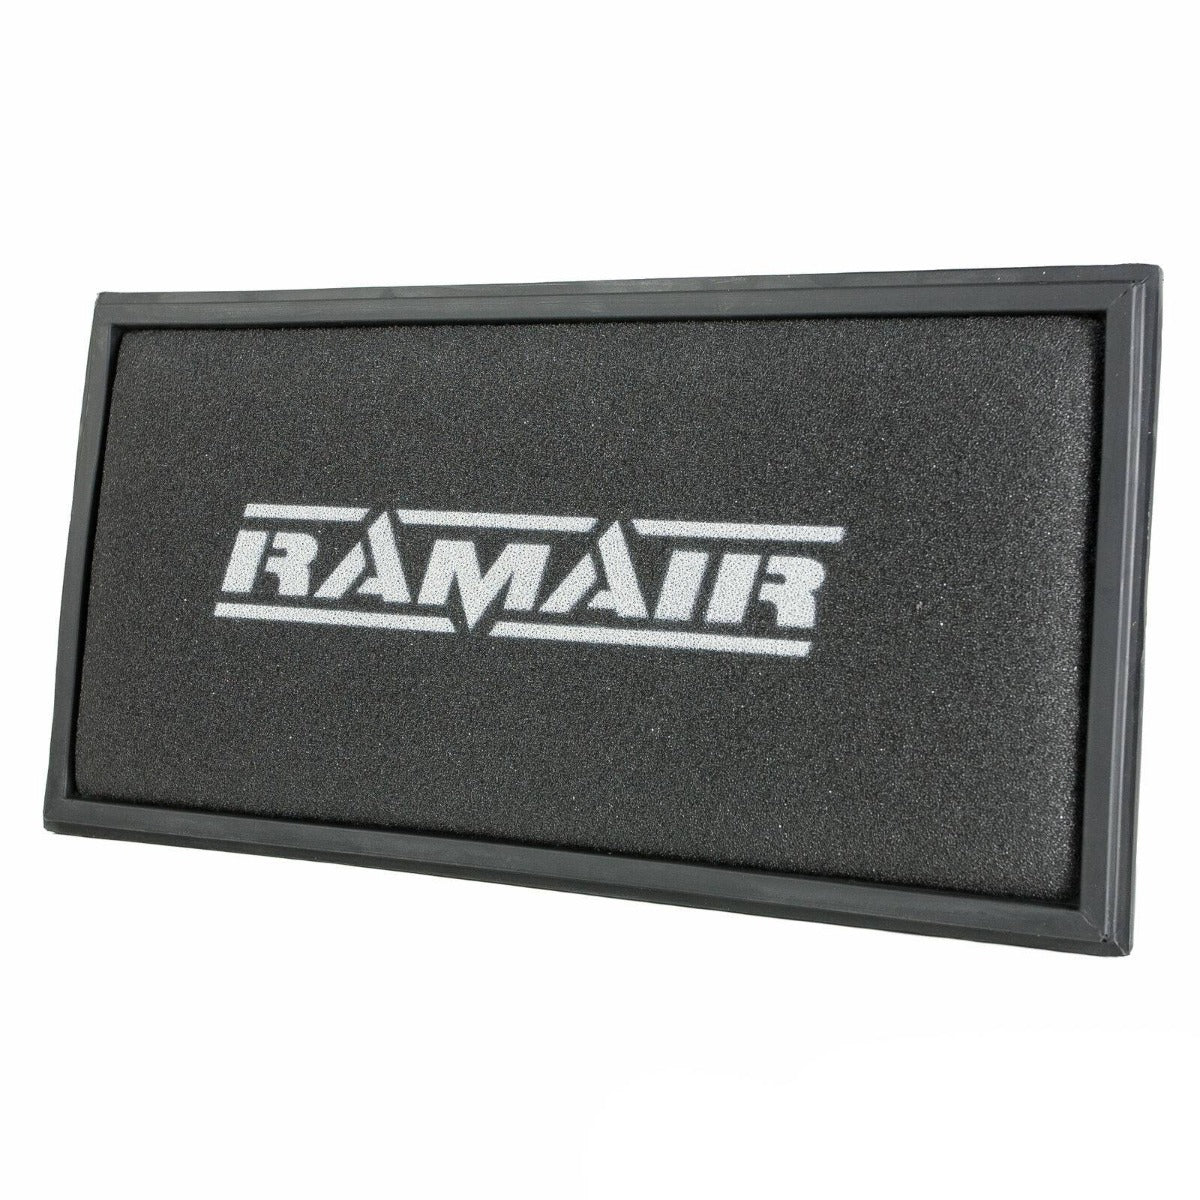 RAMAIR Air Filter for Volkswagen Golf Mk4 1.6 2.0 2.3 | 1.8 Turbo | 1.9 SDI/TDI